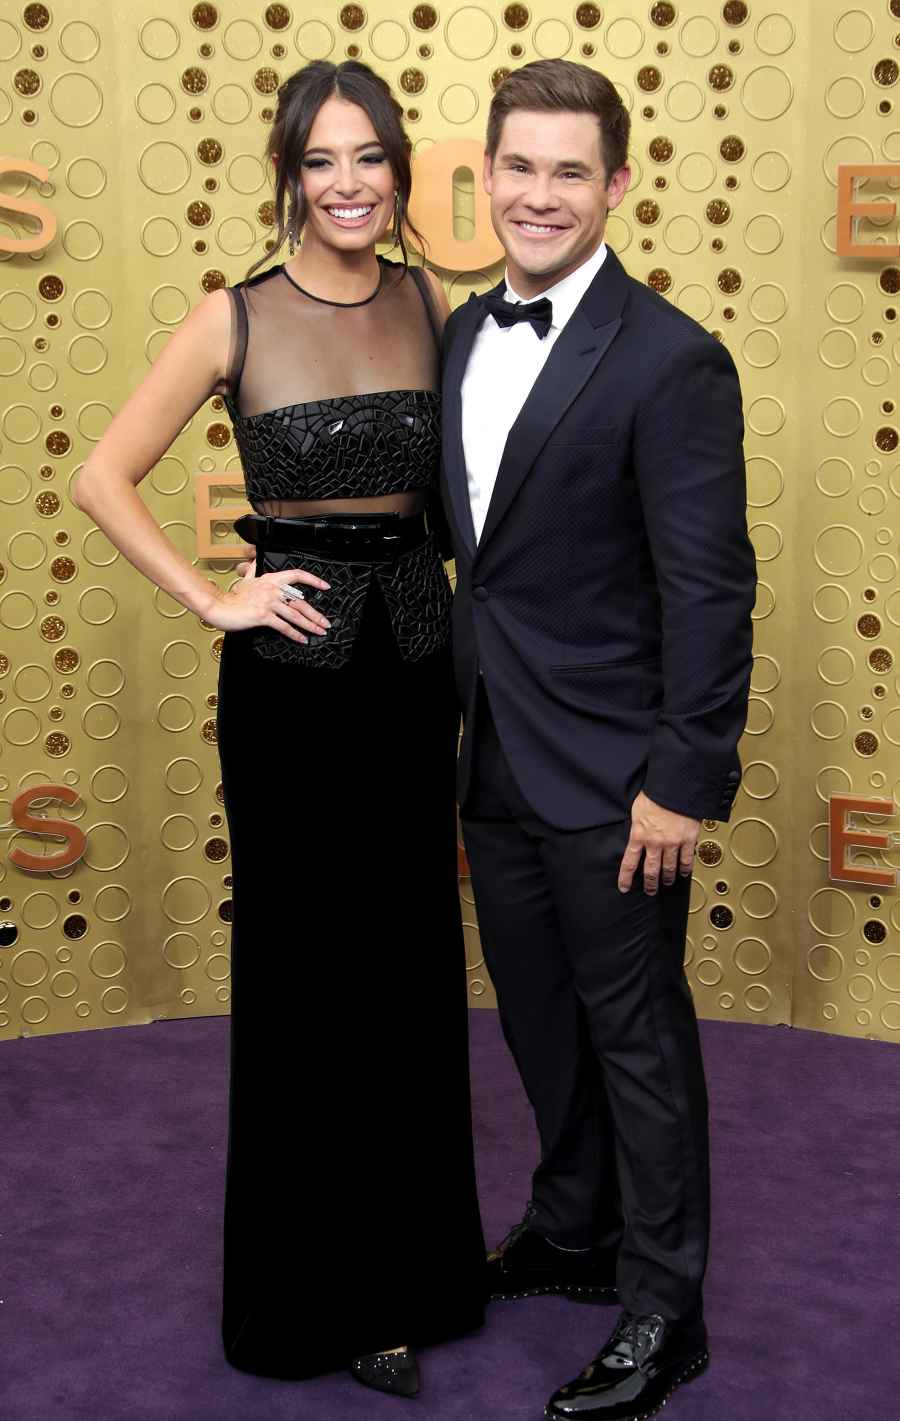 Emmys 2019 Stylish Couples - Chloe Bridges and Adam DeVine